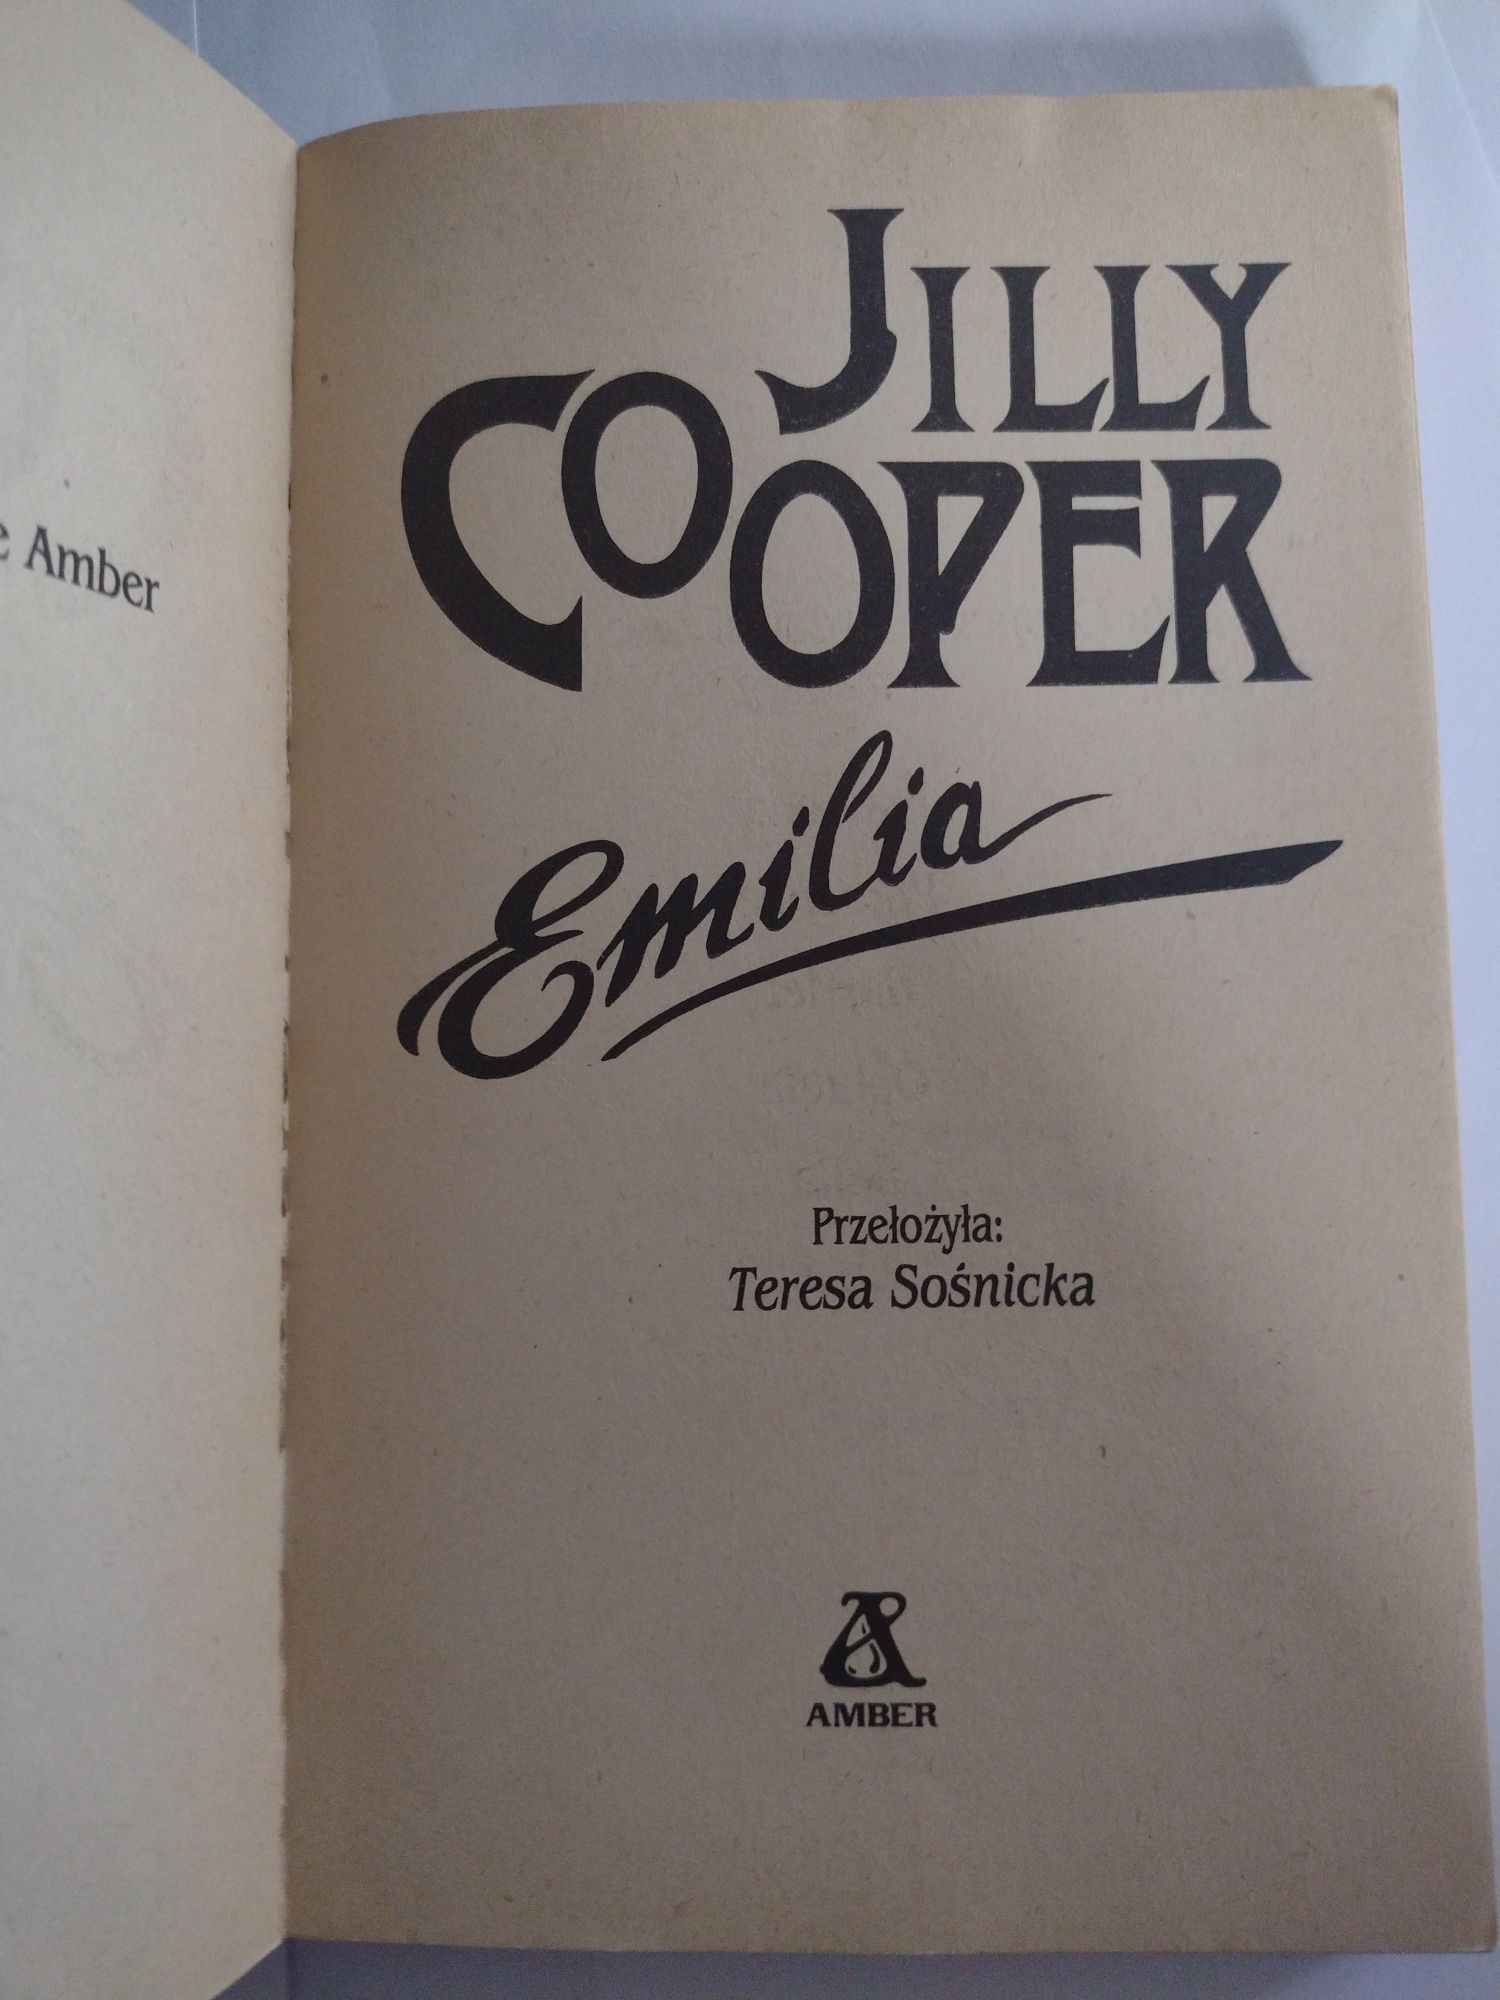 Jilly Cooper Emilia